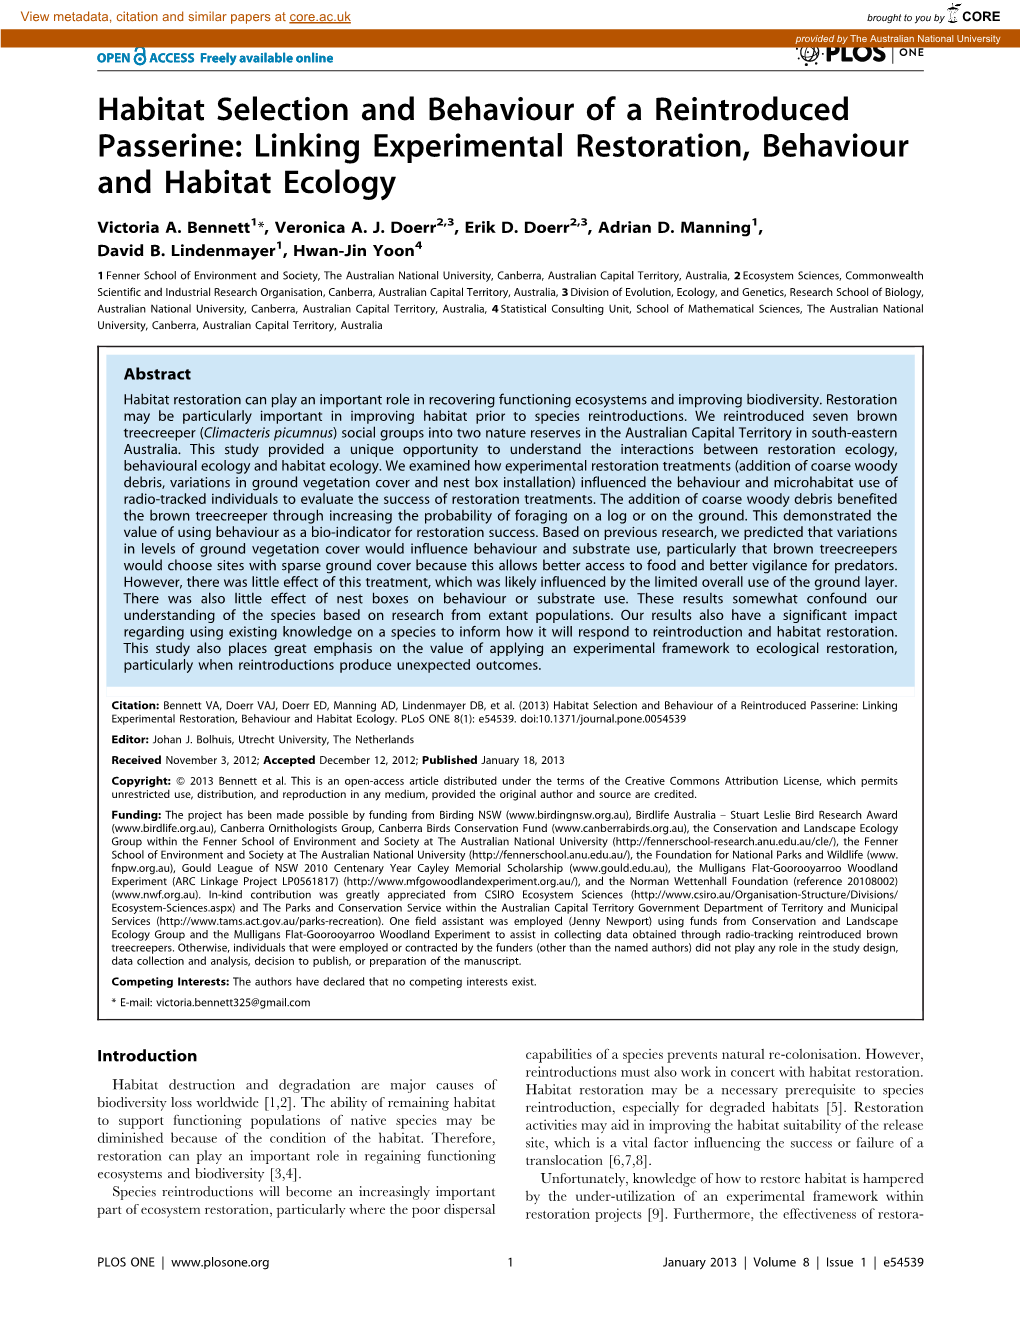 Habitat Selection and Behaviour of a Reintroduced Passerine: Linking Experimental Restoration, Behaviour and Habitat Ecology